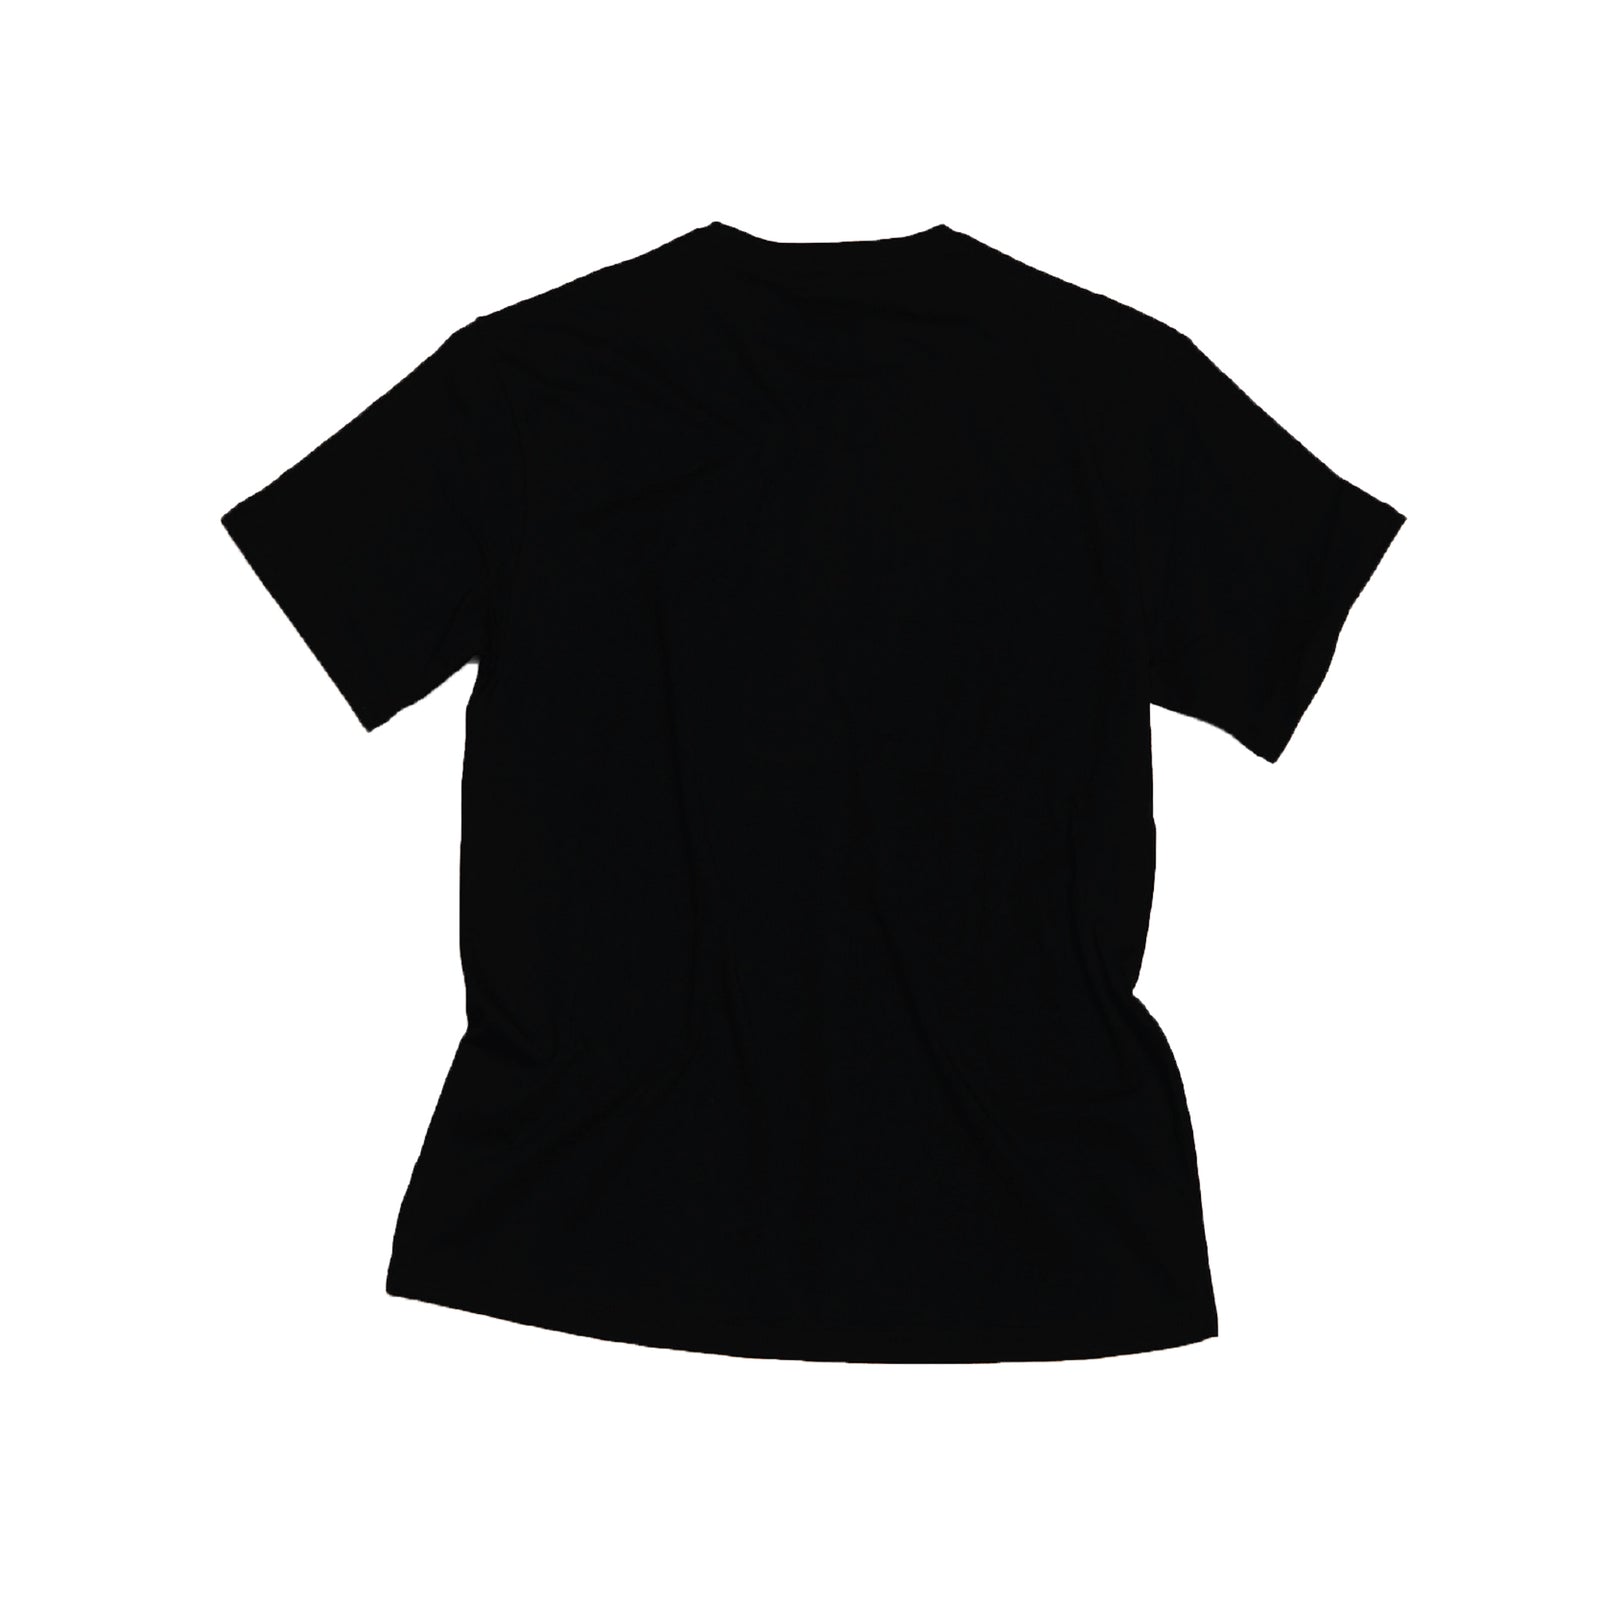 Thomas x Jack McCrae T-Shirt Black